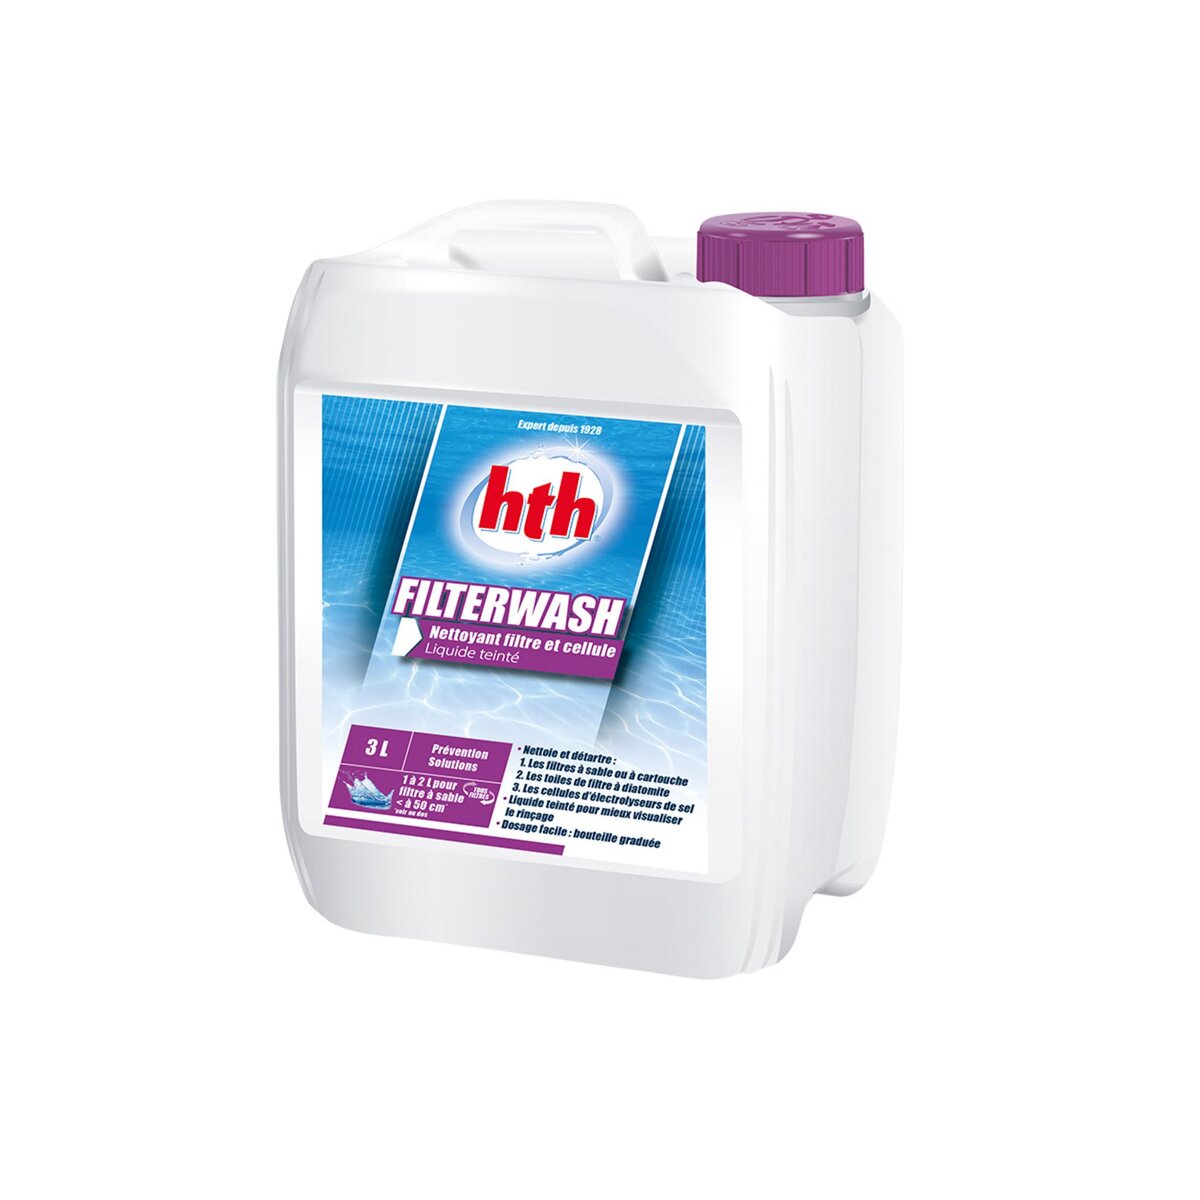 HTH Nettoyant filtre à sable Filterwash 3 L - HTH